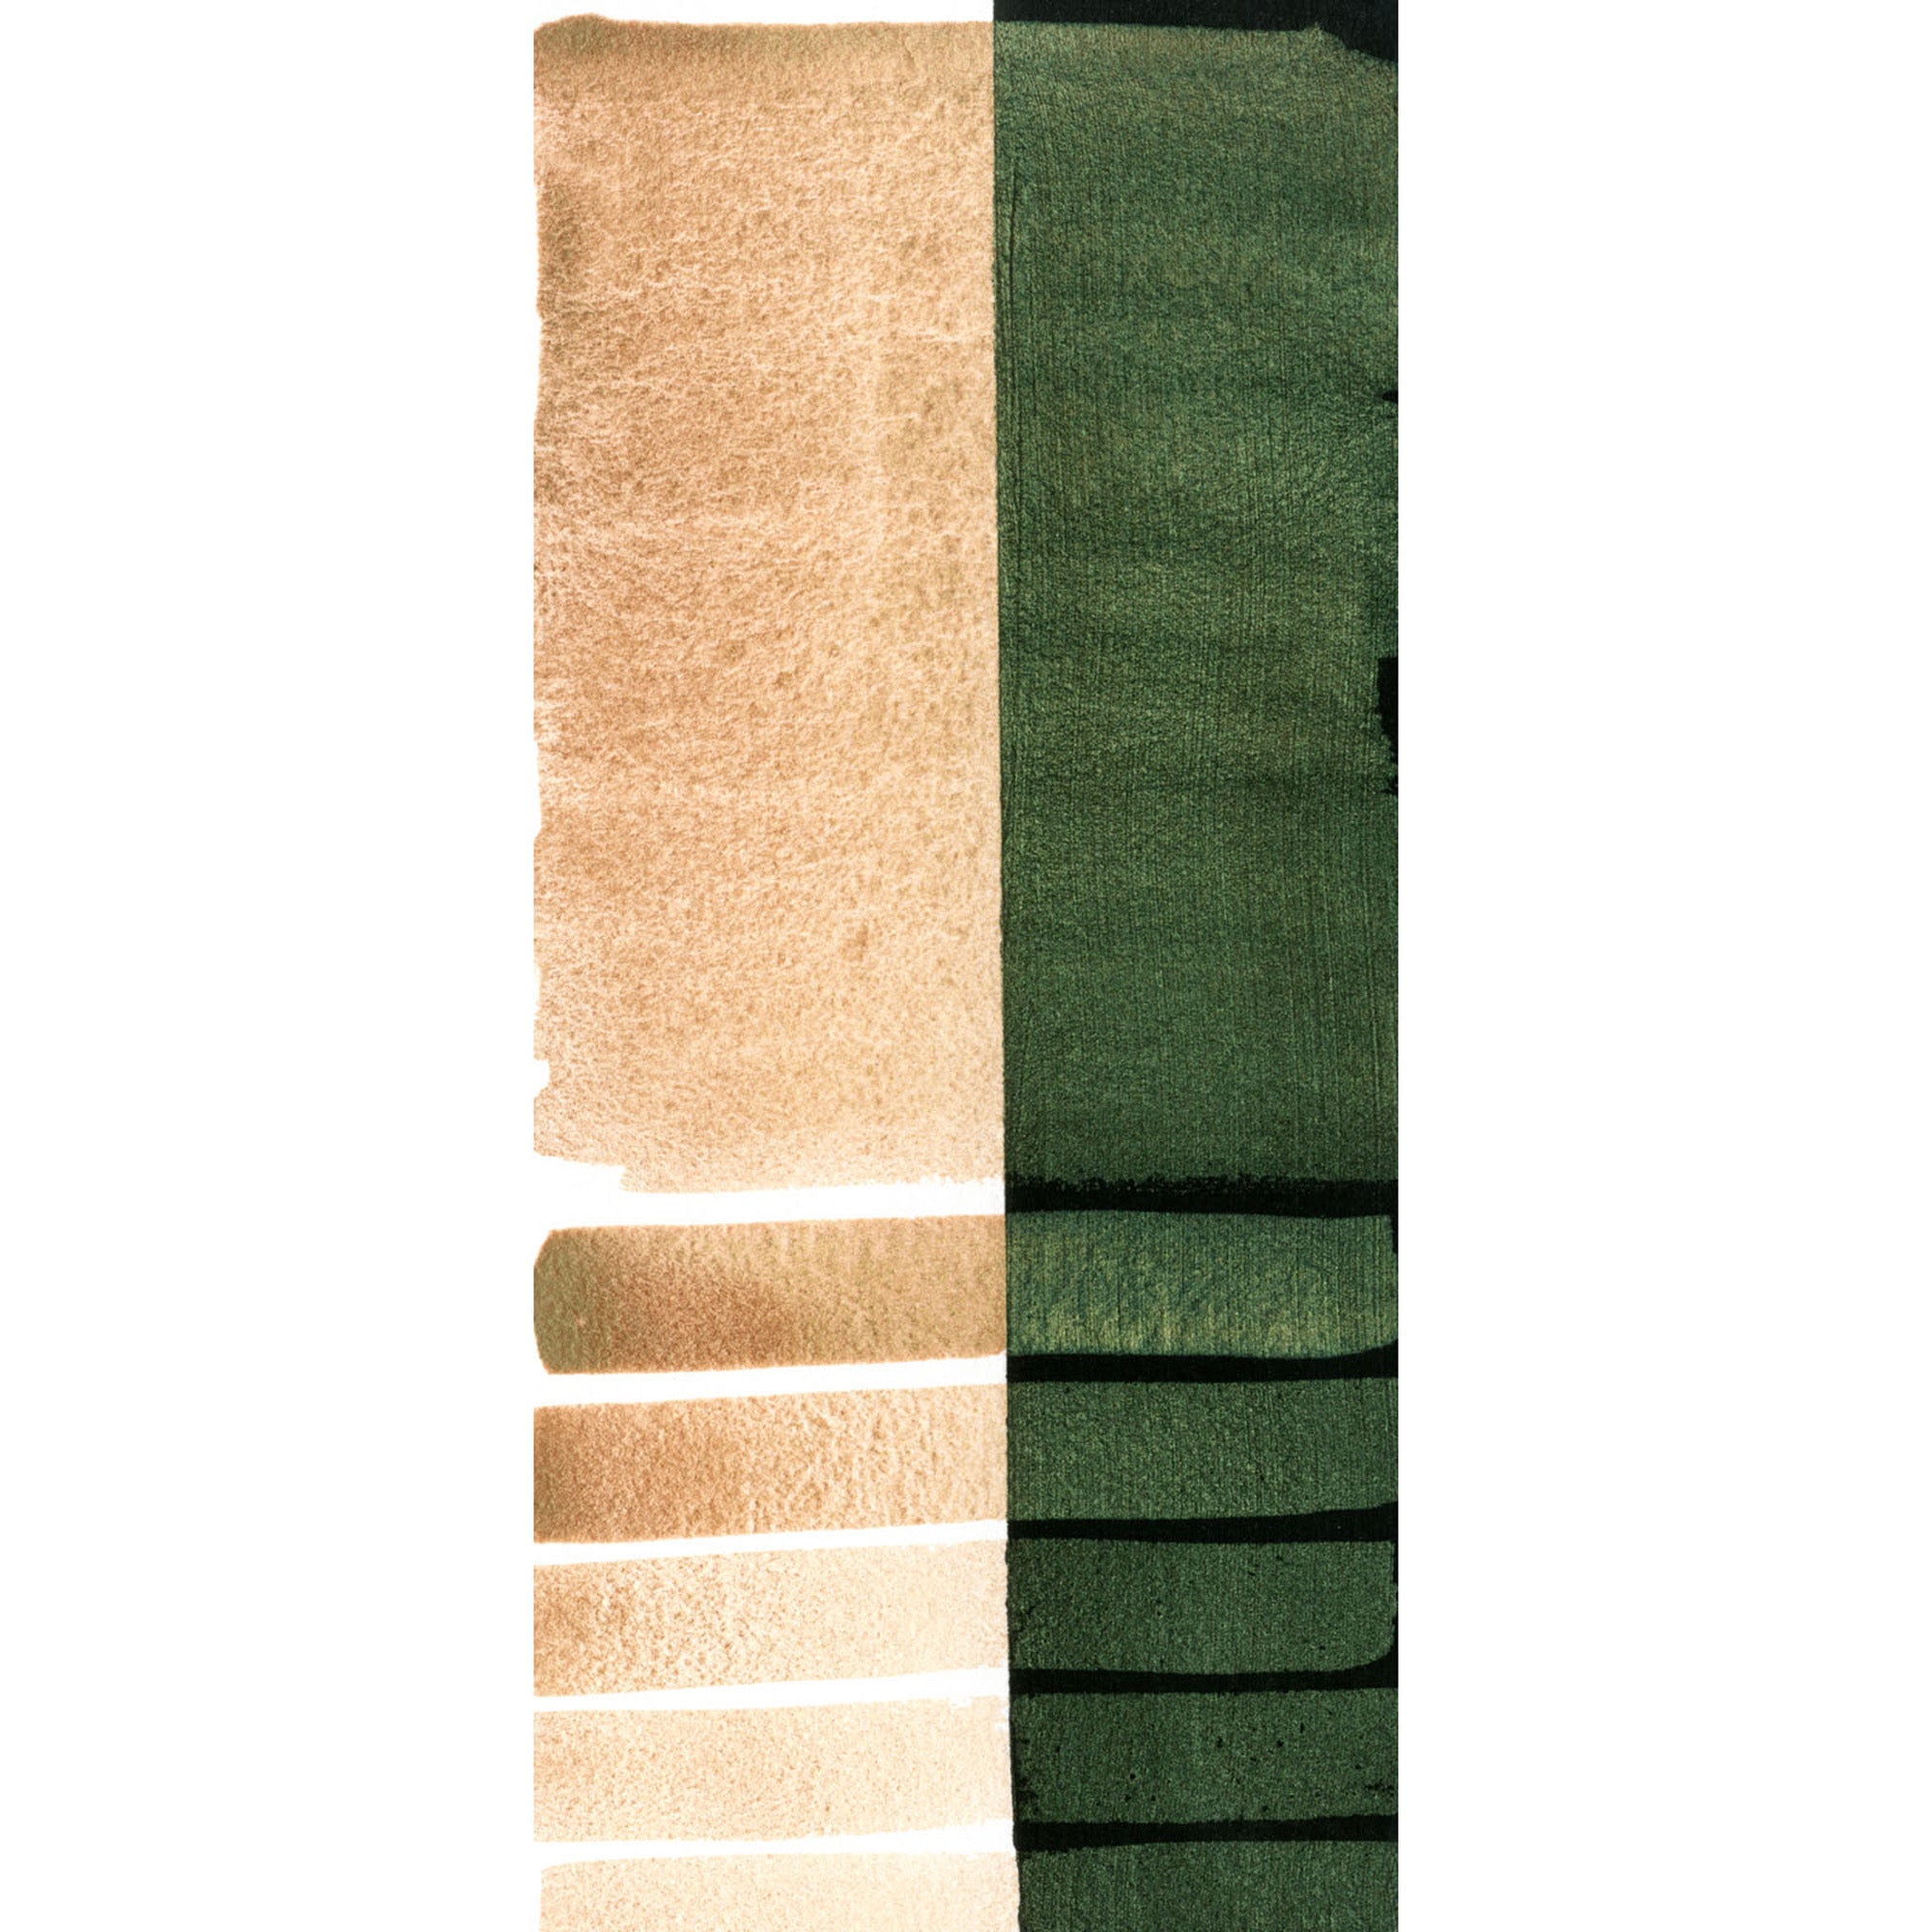 Daniel Smith Watercolor 15ml Duochrome Saguaro Green 1